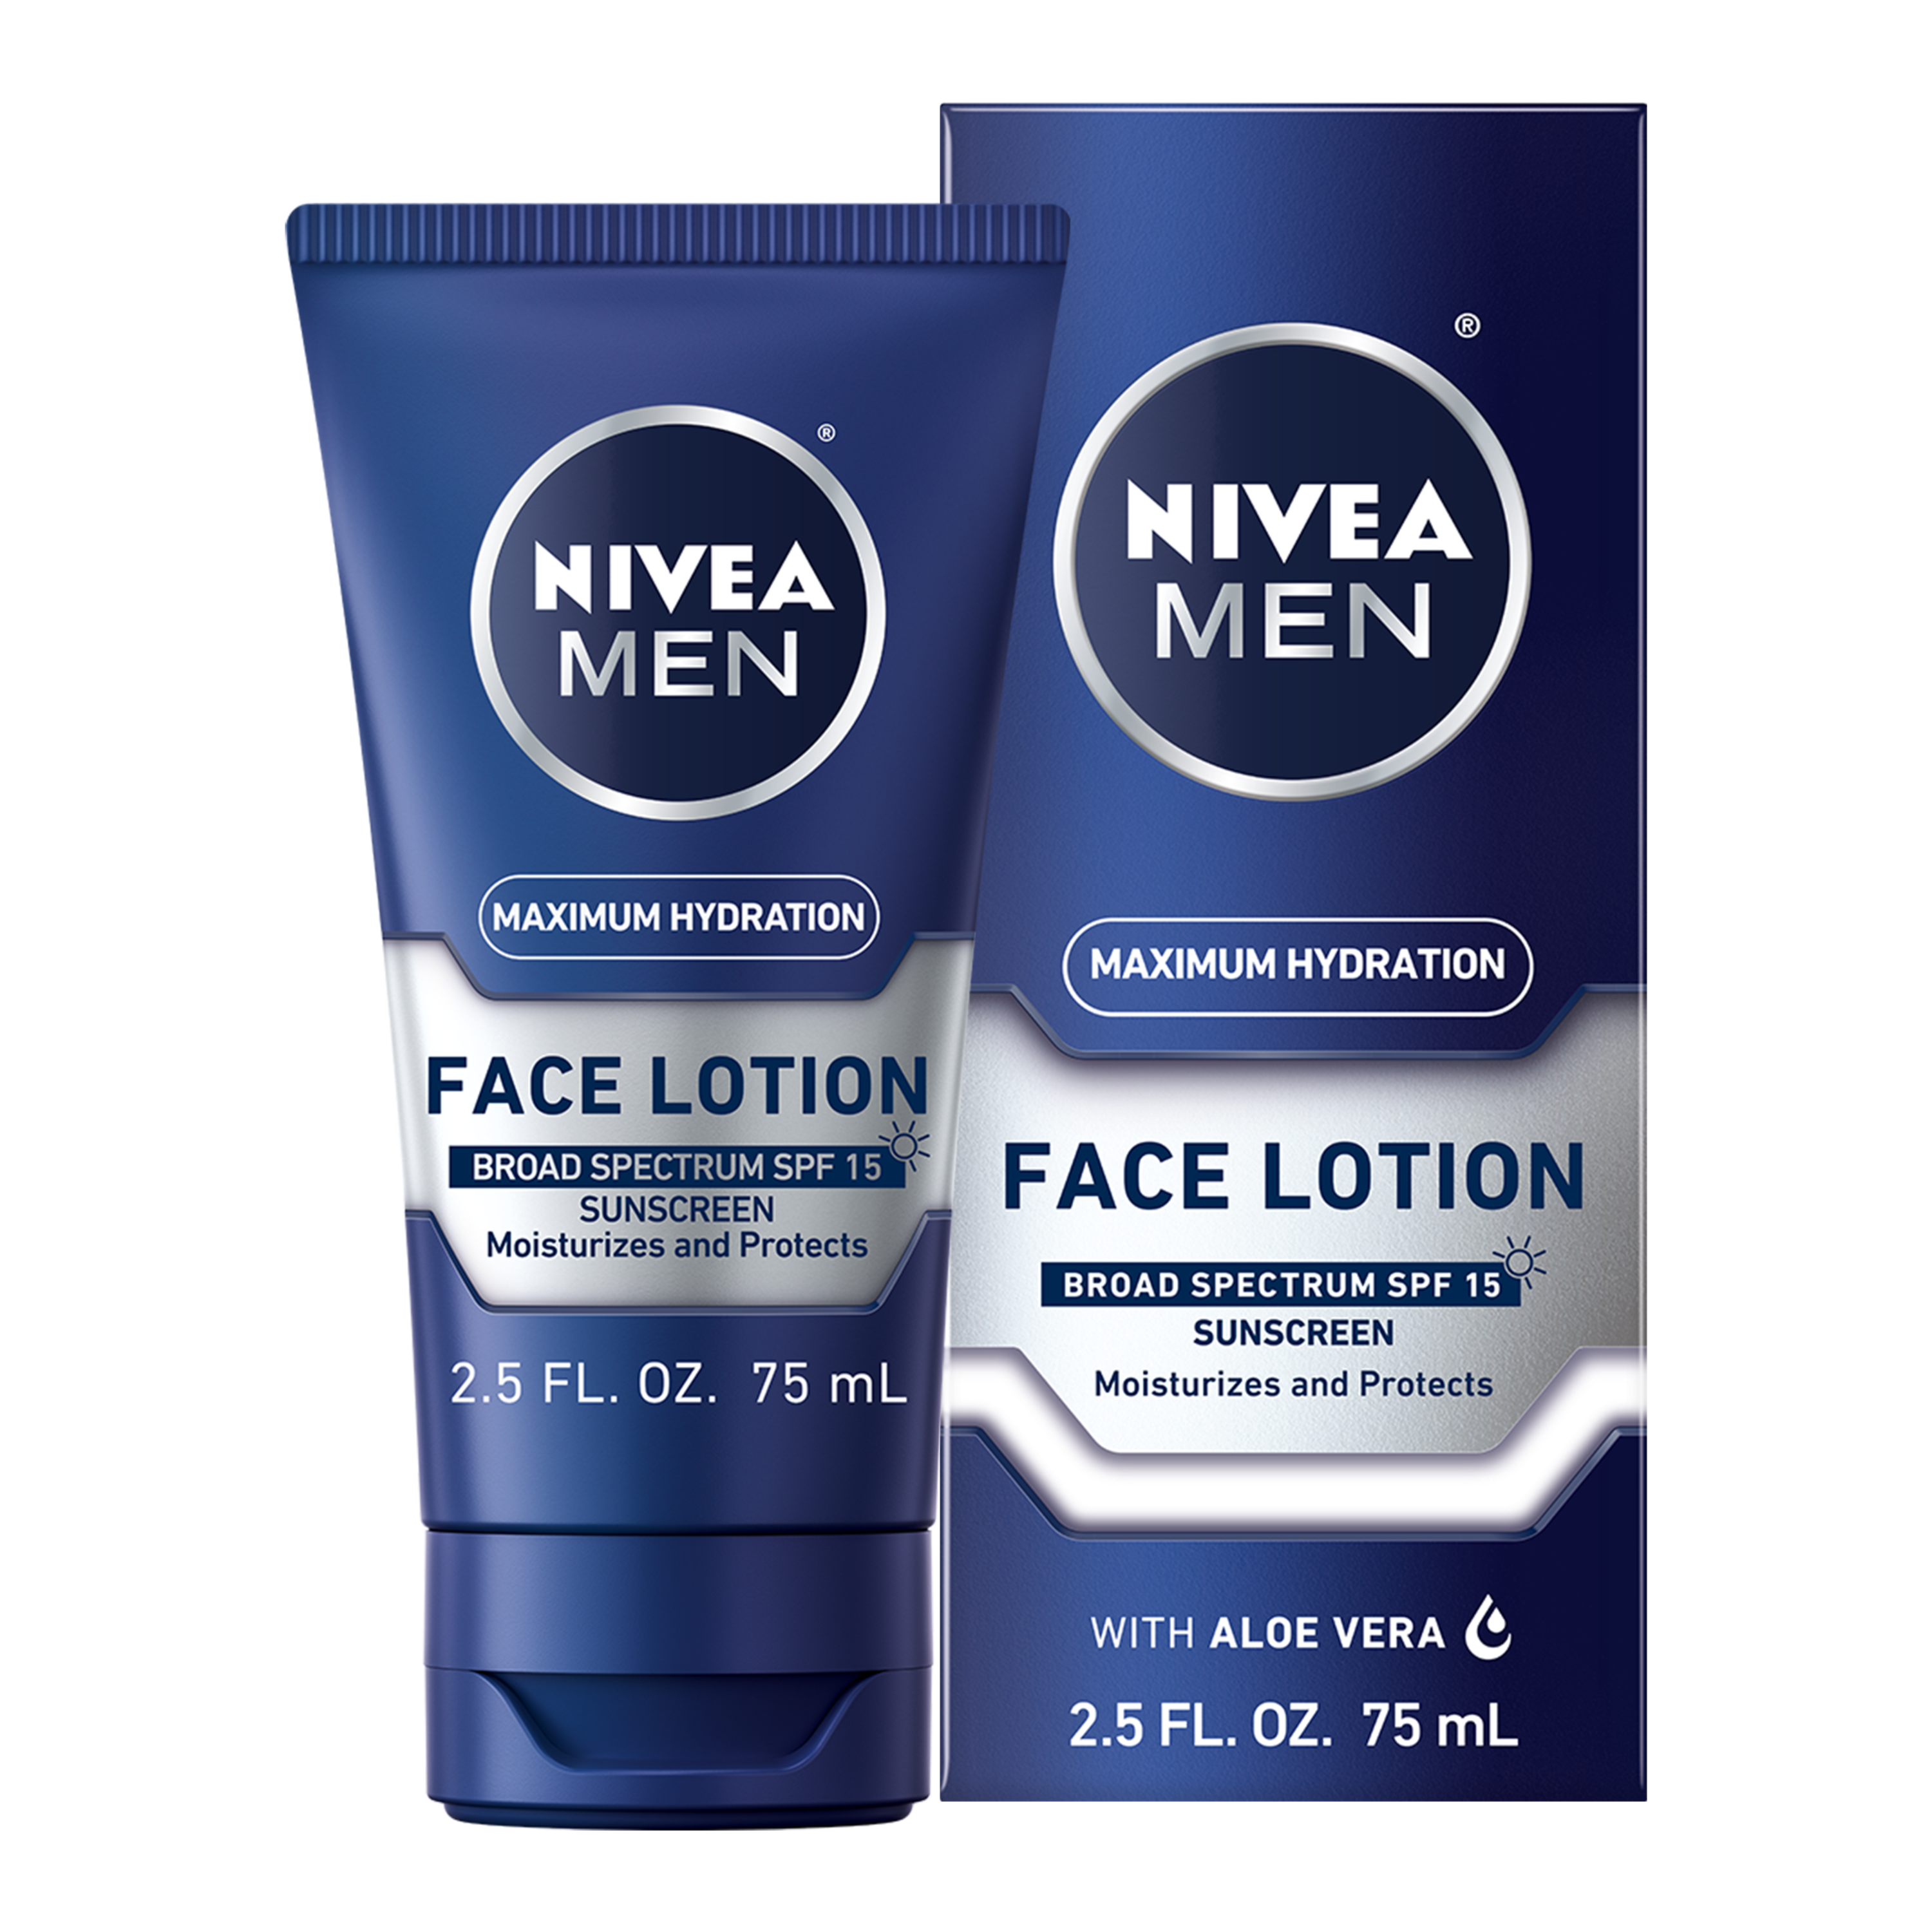 NIVEA MEN Maximum Hydration Face Lotion with Broad Spectrum SPF 15 Sunscreen, 2.5 Fl Oz Tube - image 1 of 8